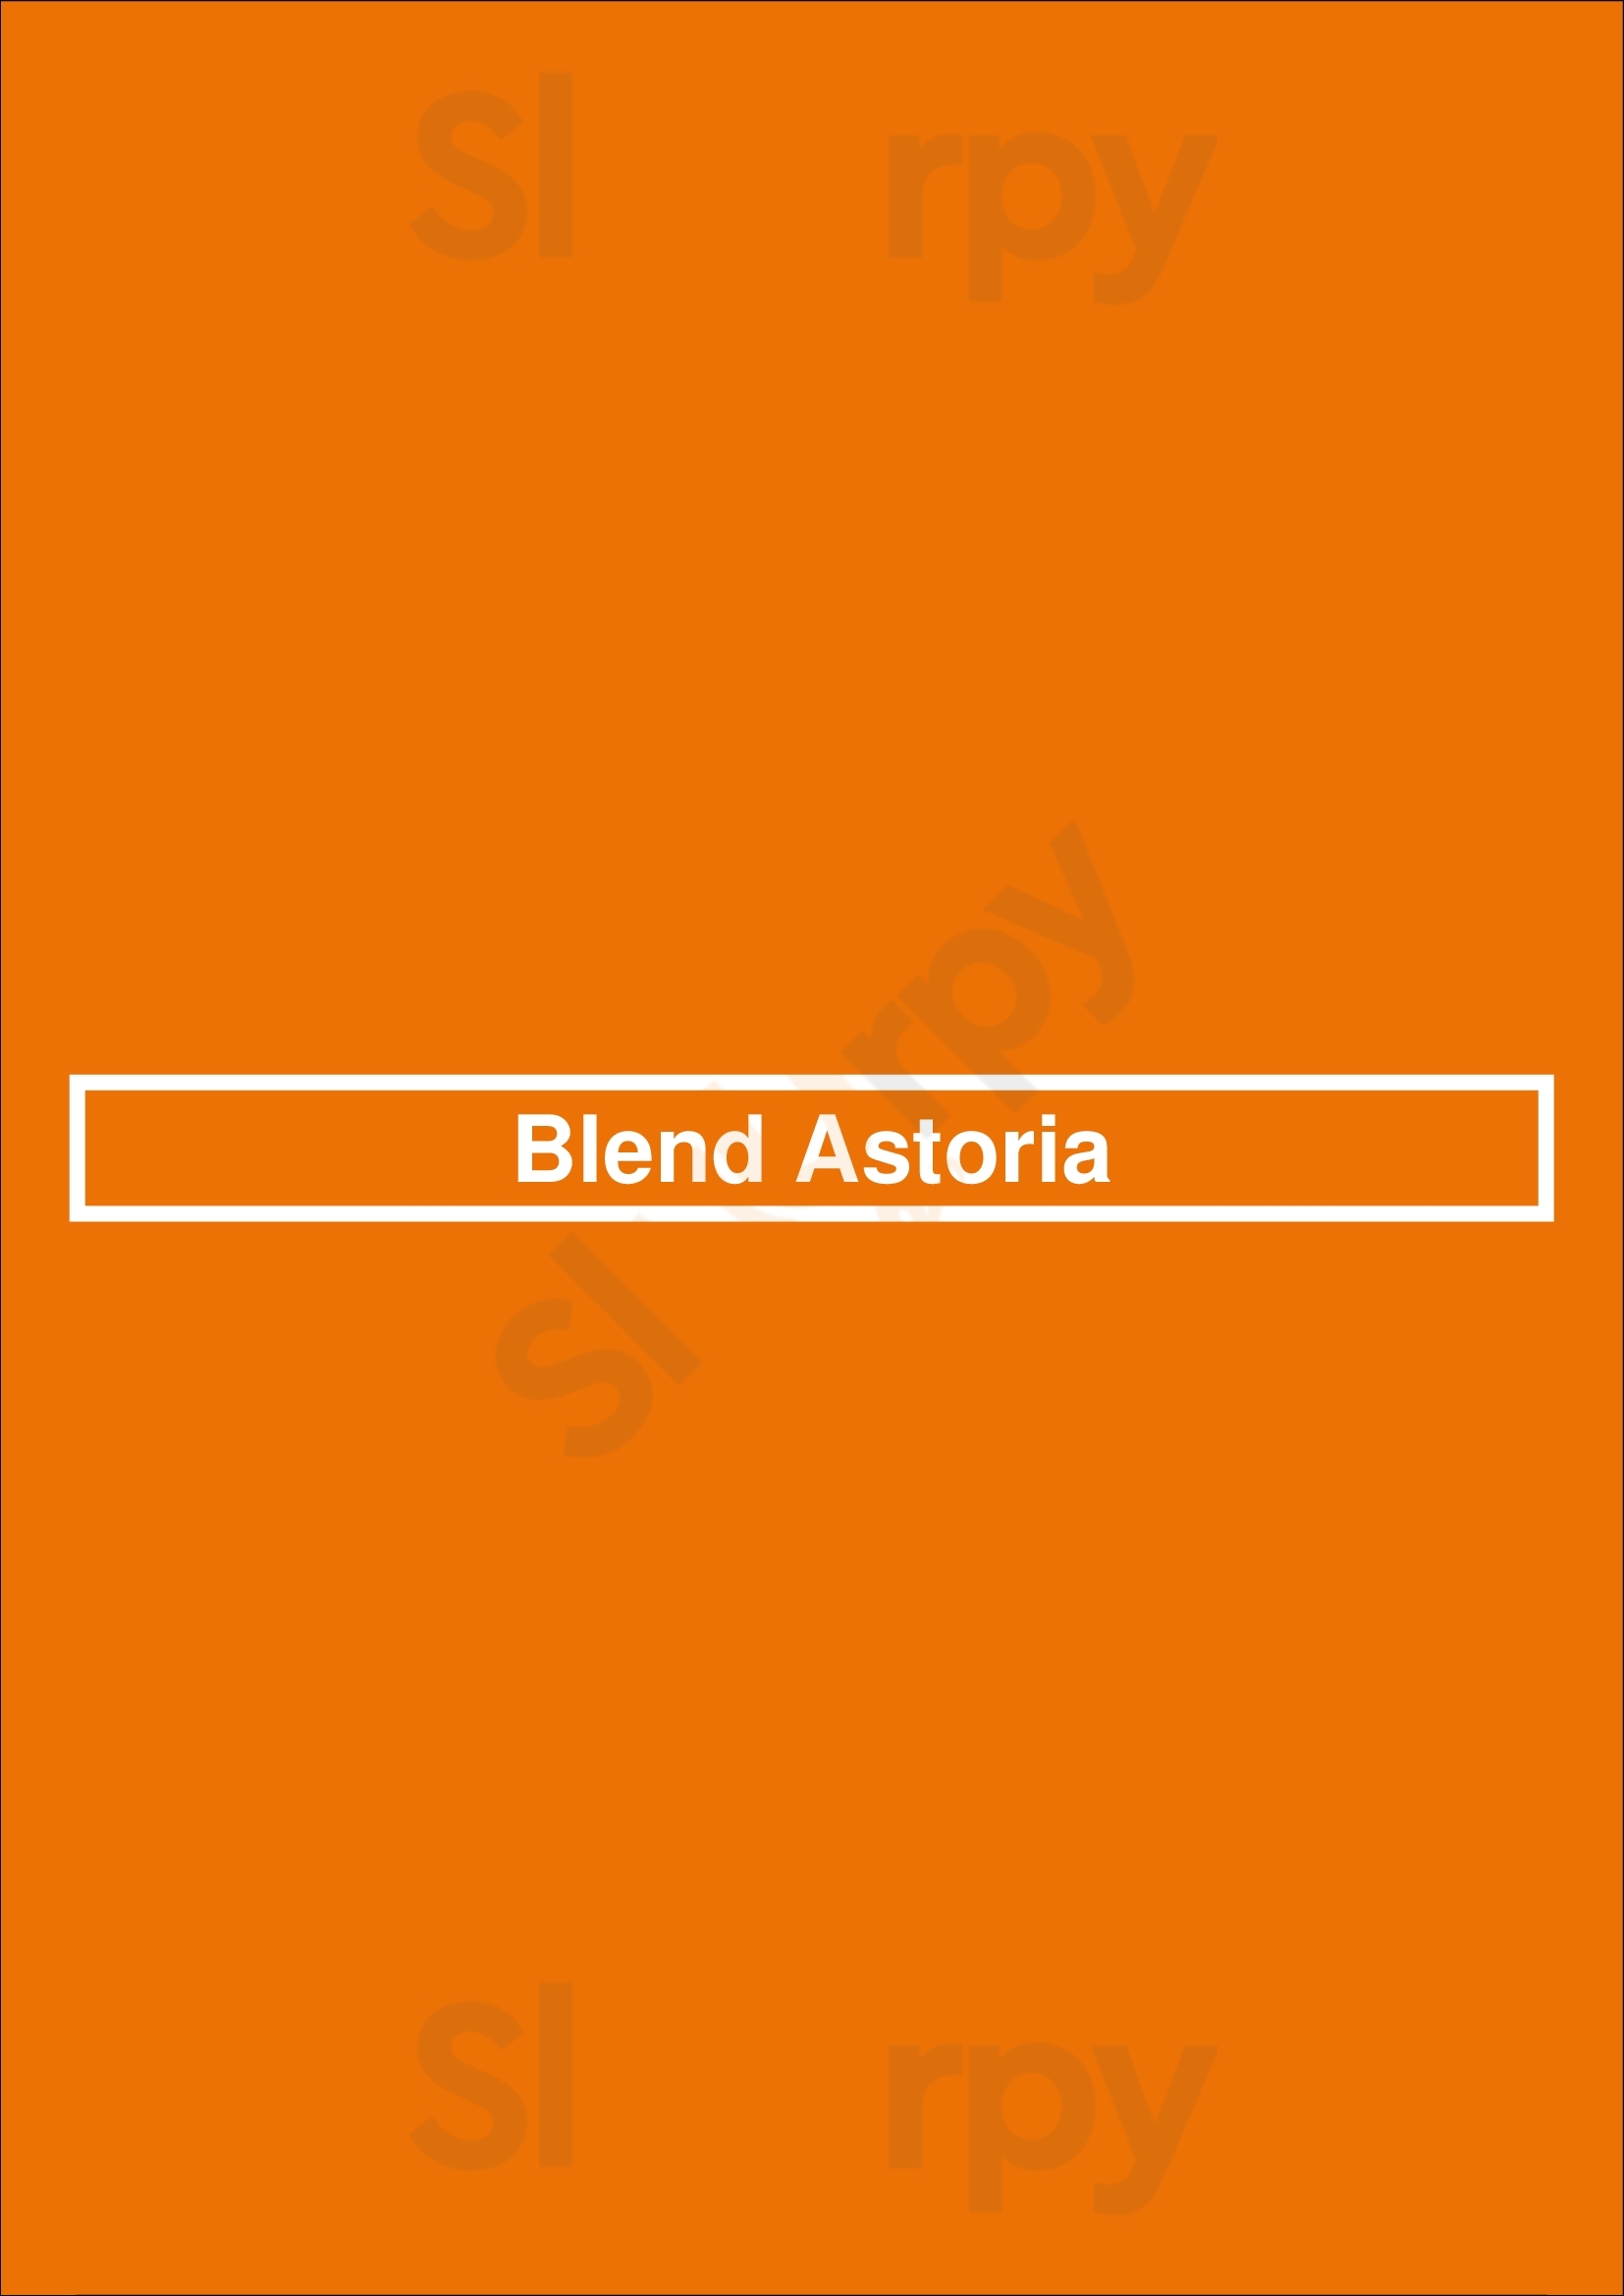 Blend Astoria Astoria Menu - 1